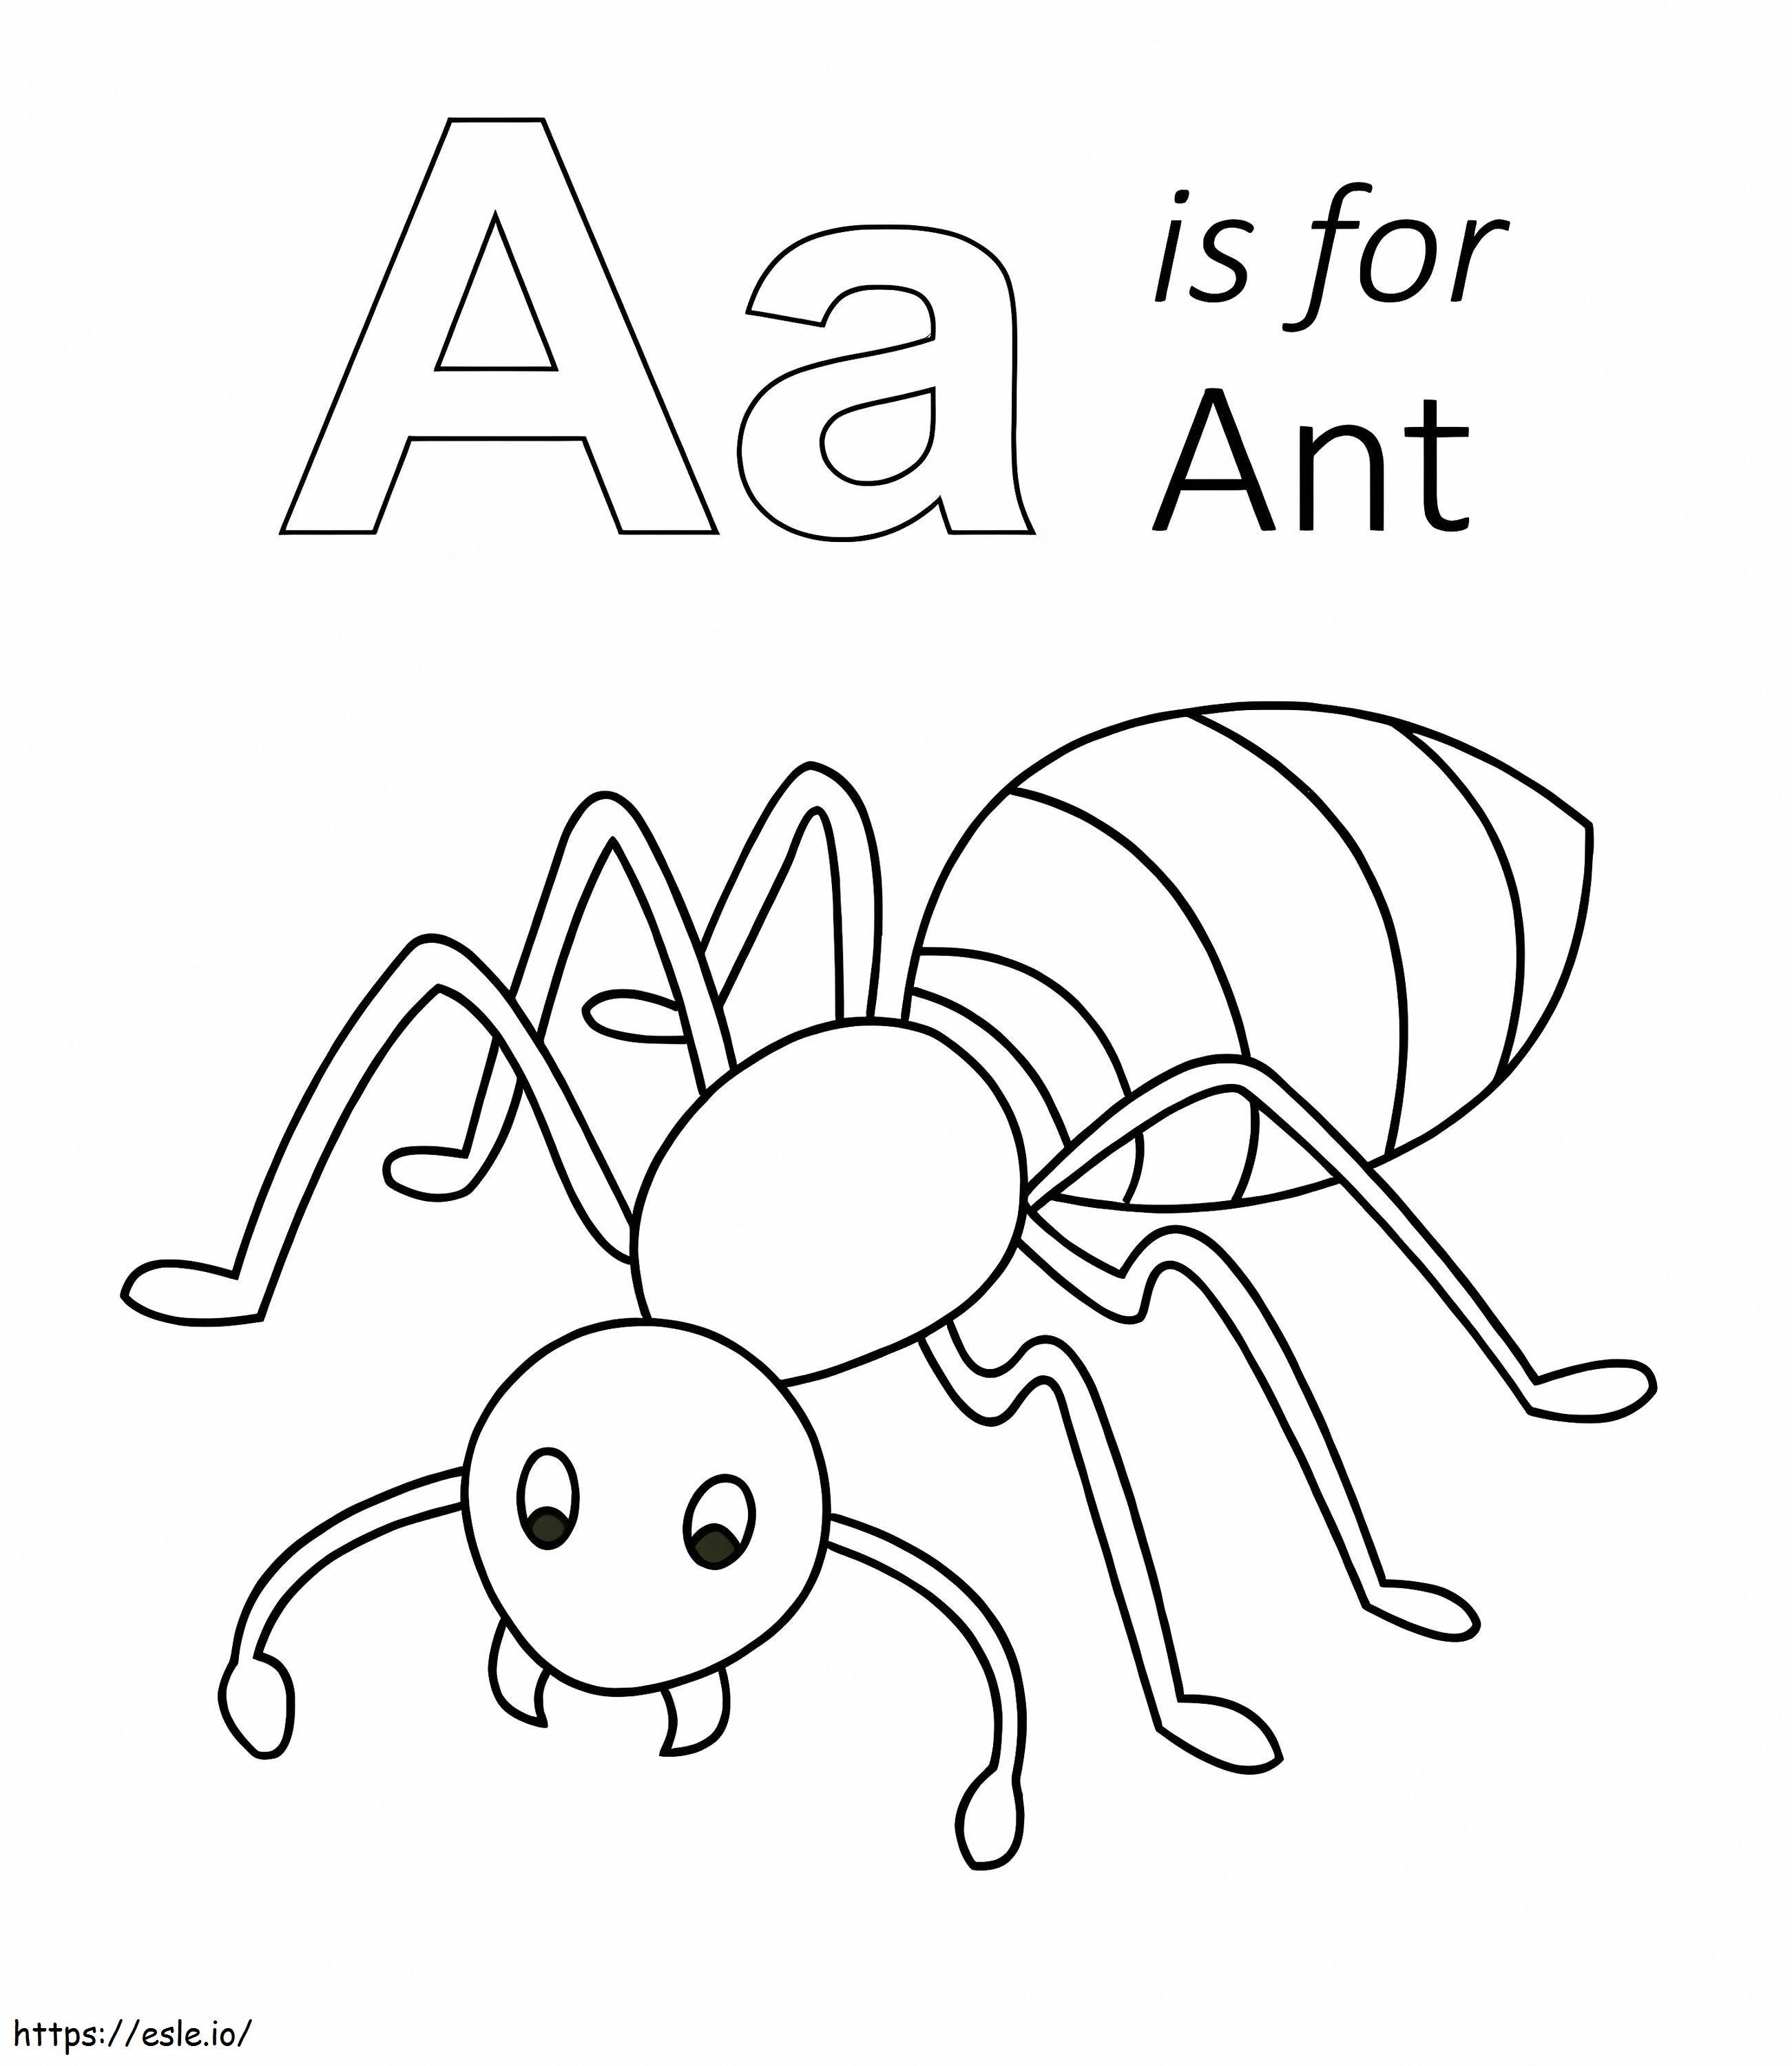 Litera A jak mrówka kolorowanka